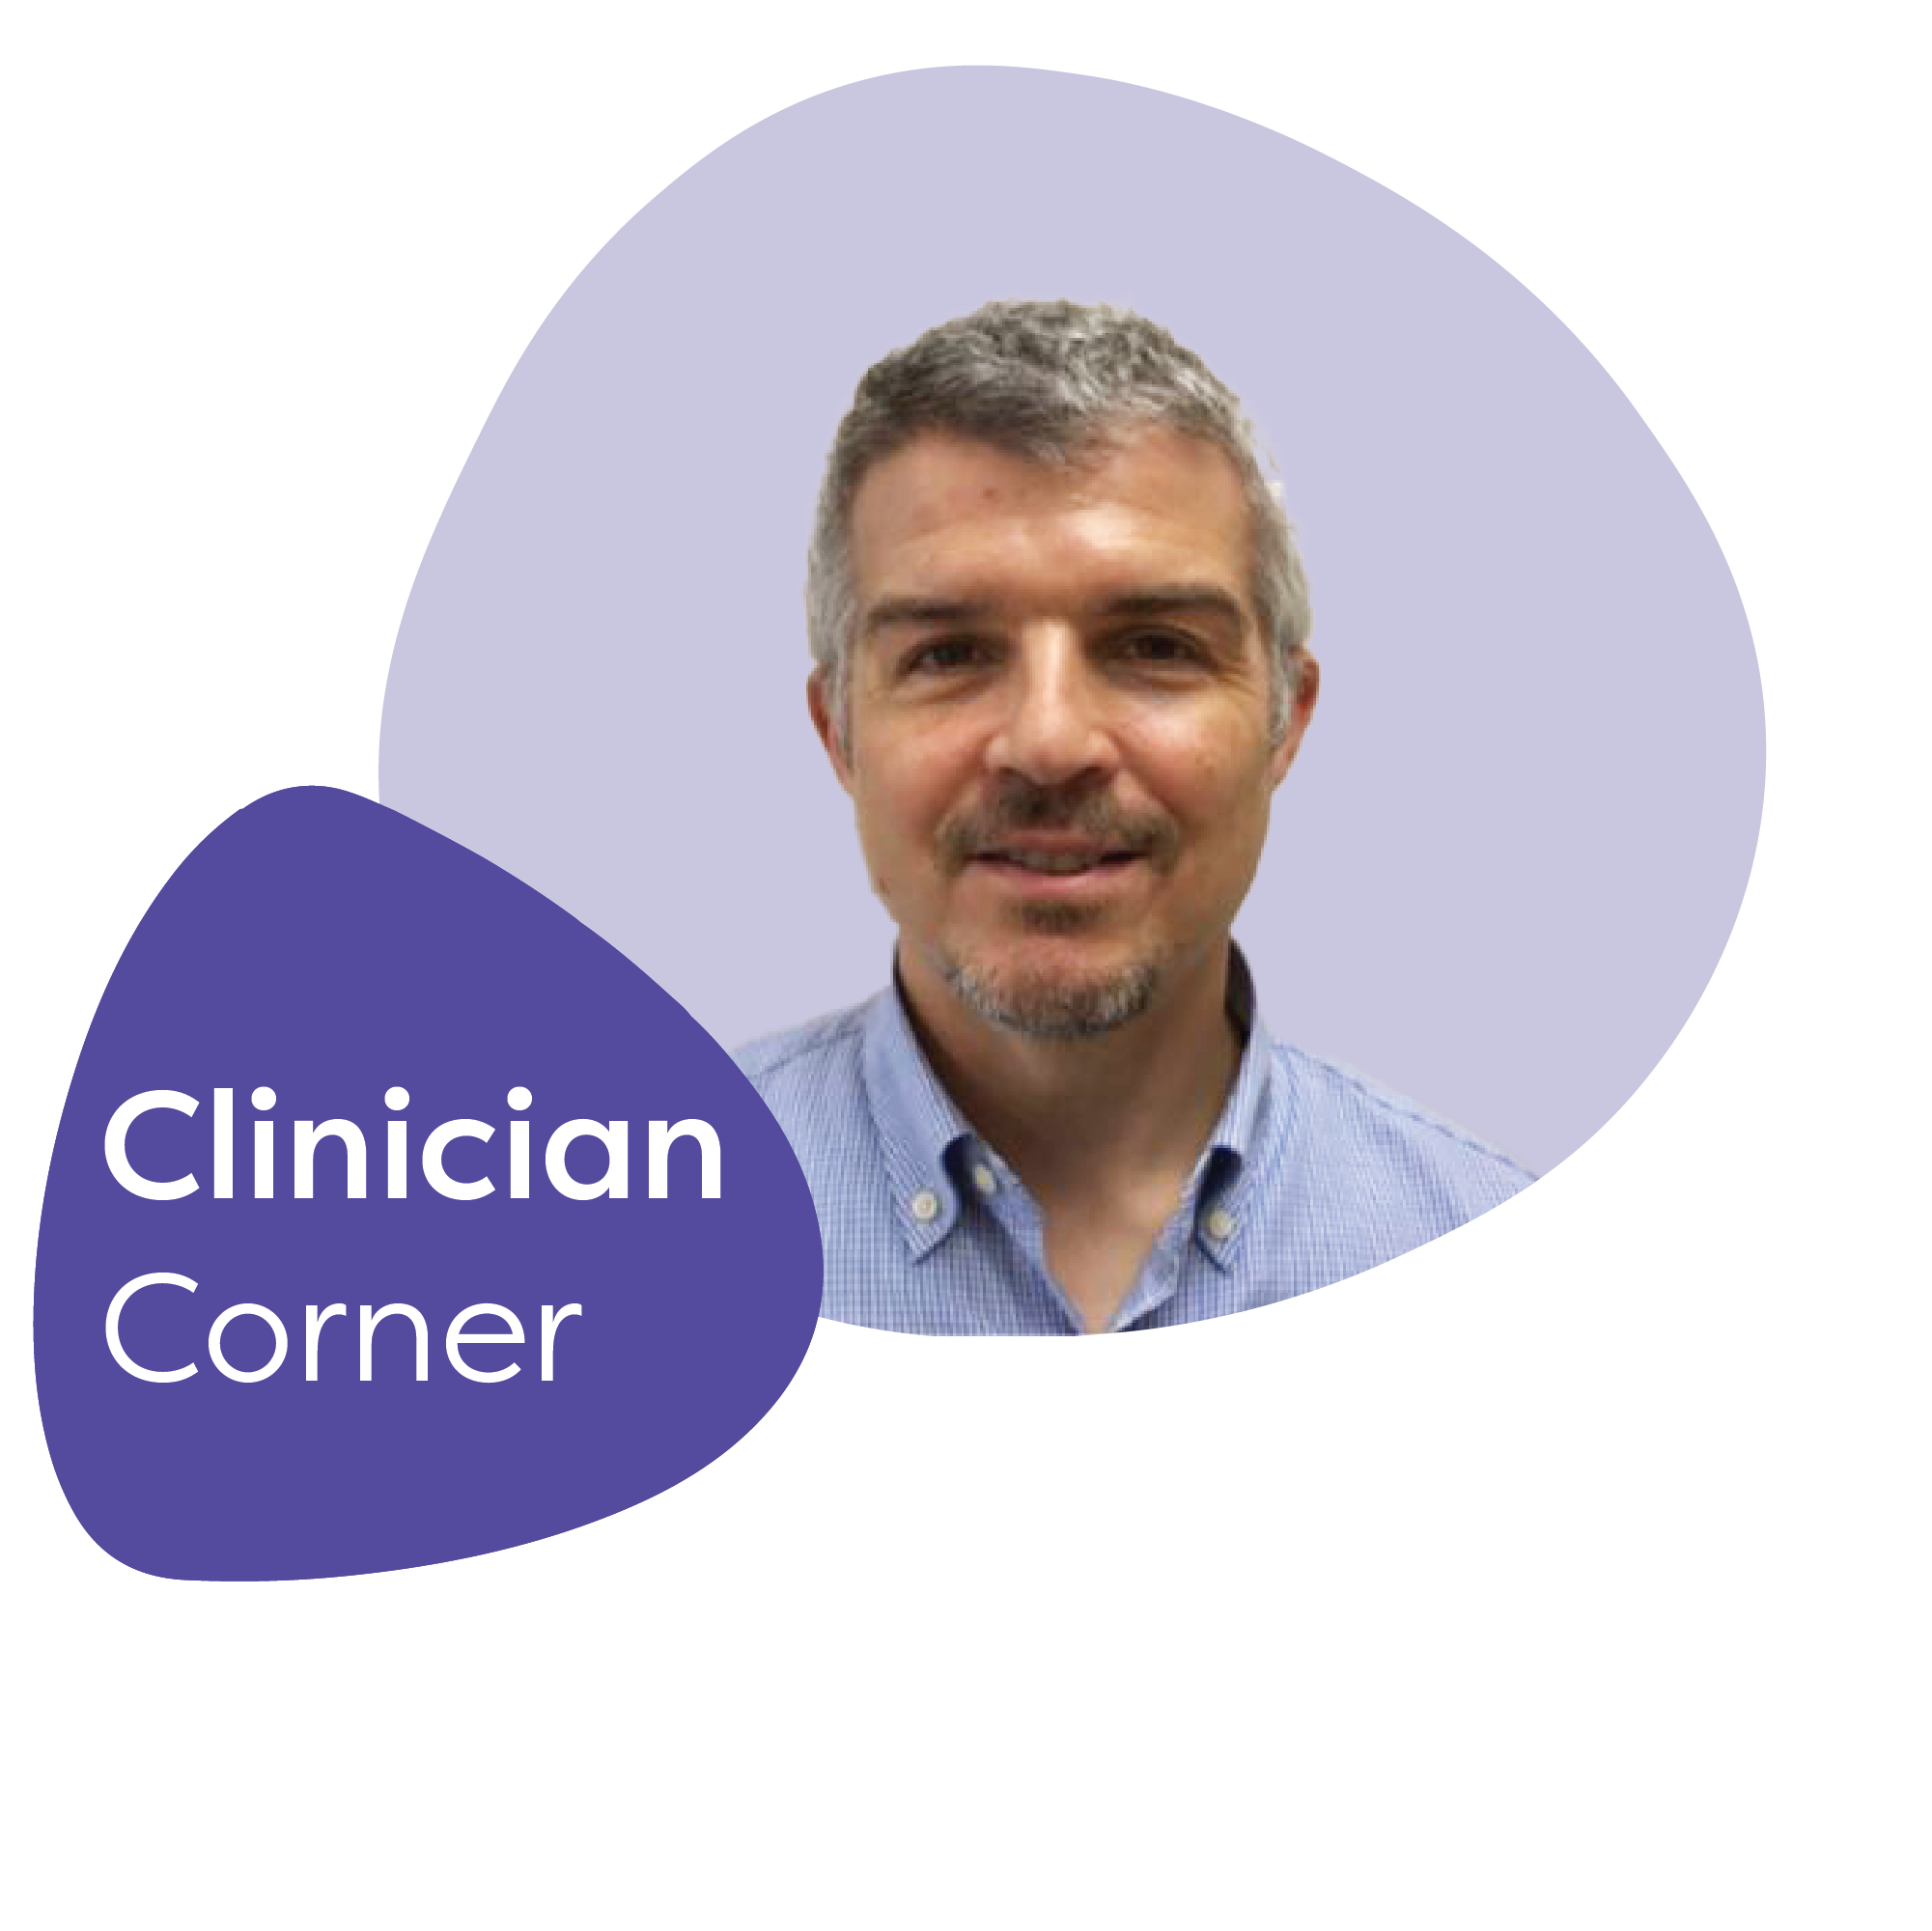 Clinician Corner: Meet Dr. Mark Miceli, MD